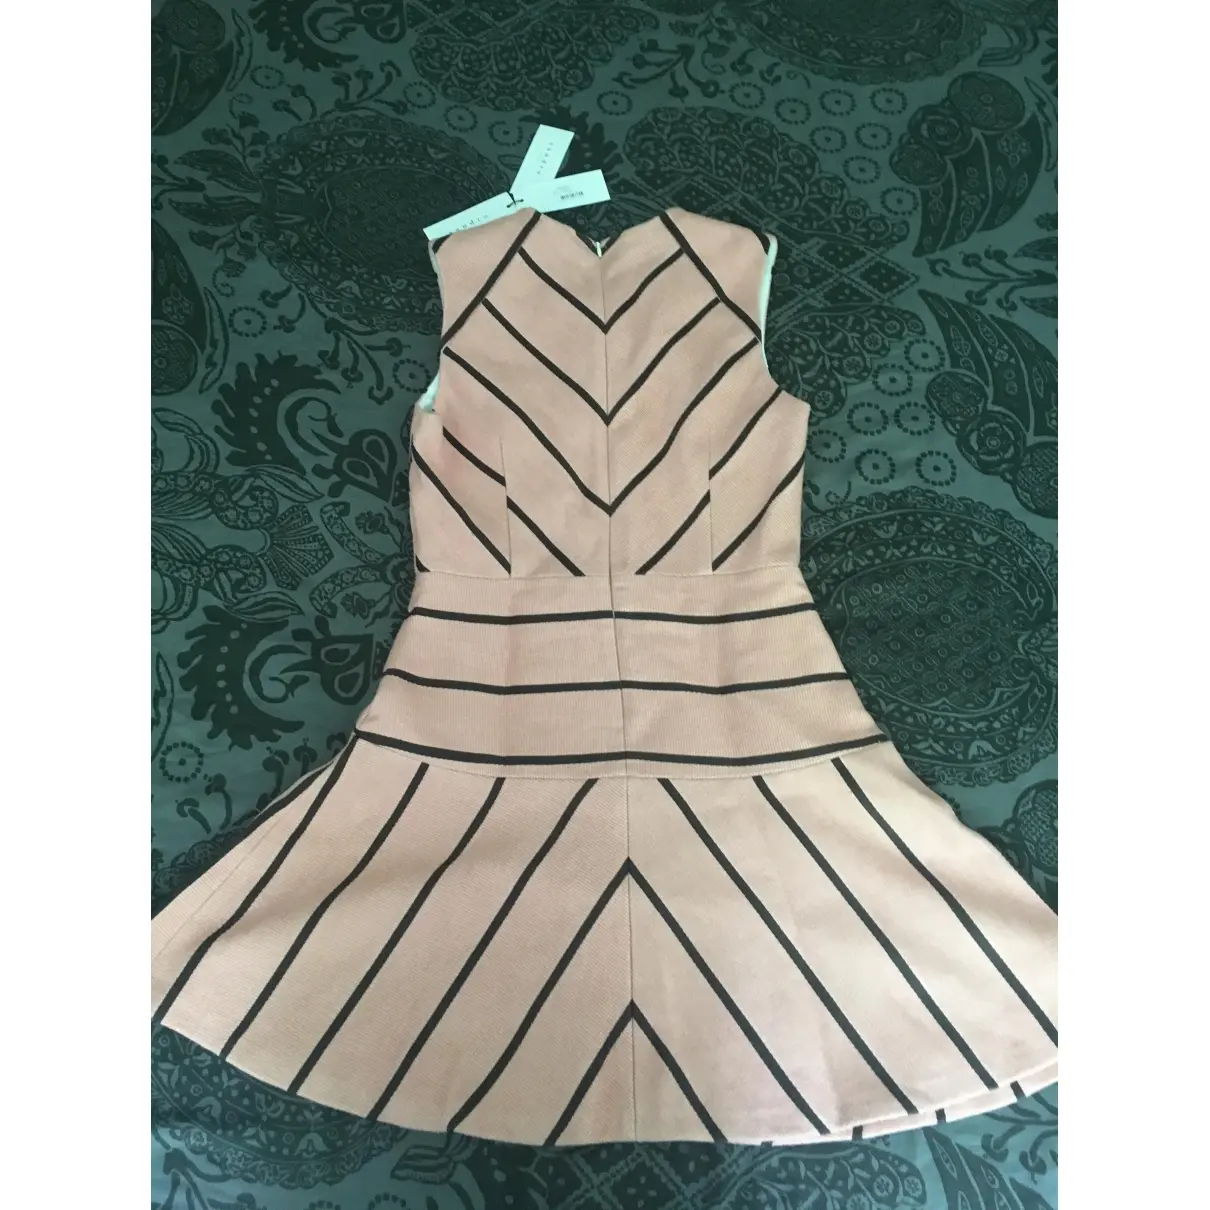 Sandro Mini dress for sale